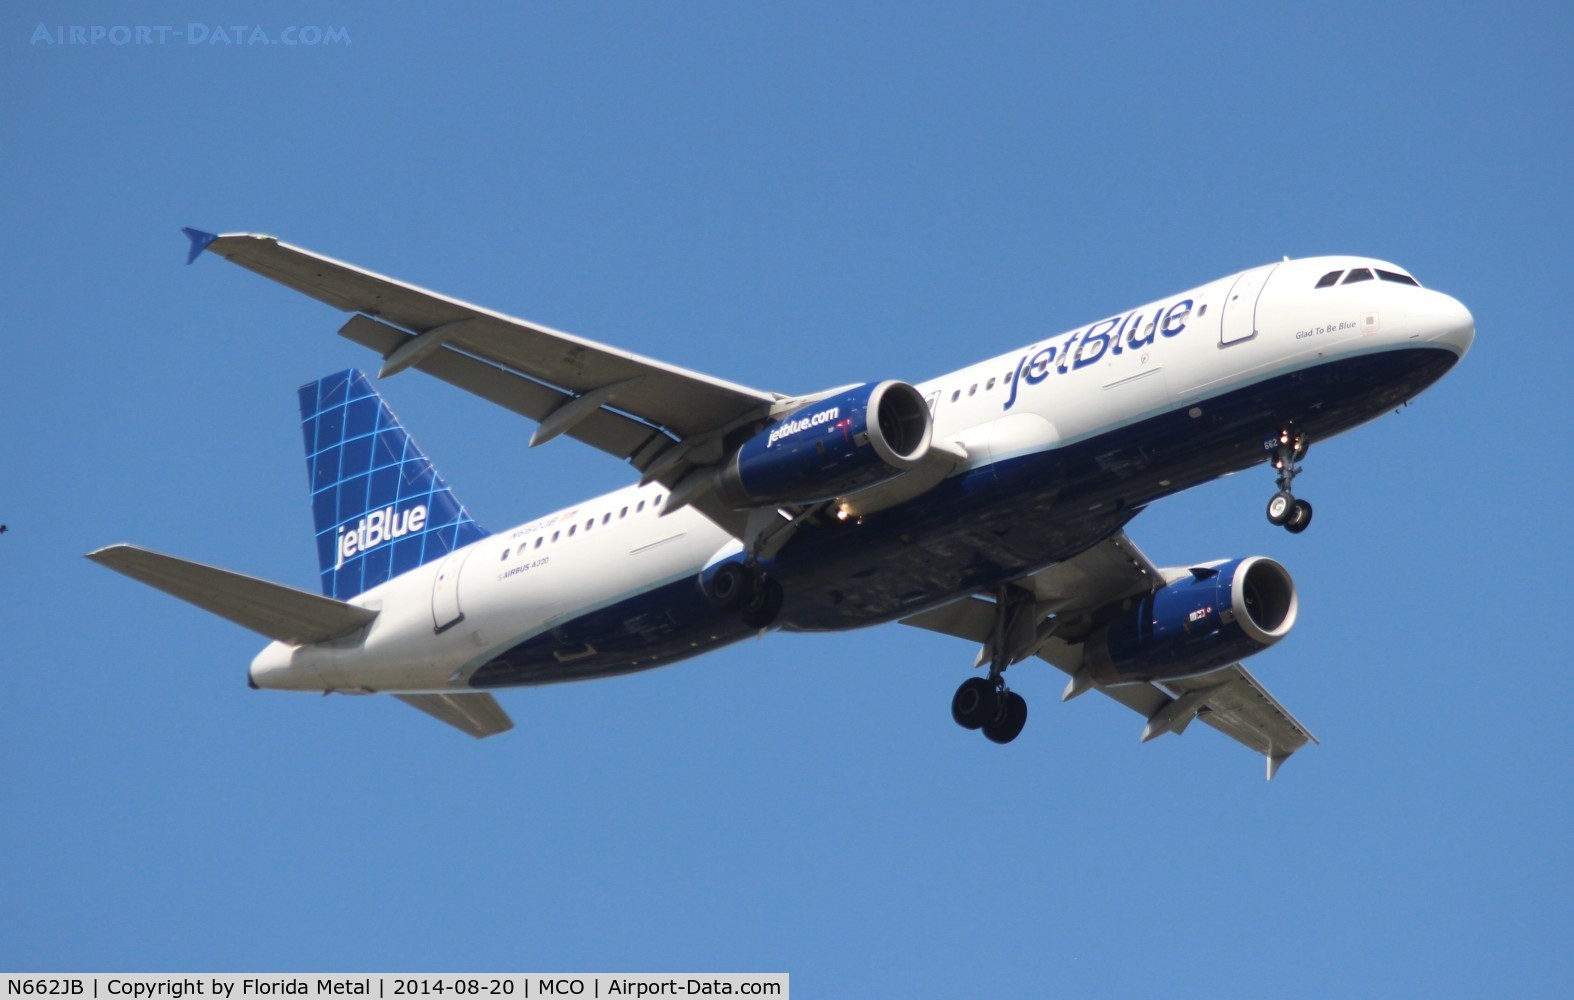 N662JB, 2007 Airbus A320-232 C/N 3263, Jet Blue